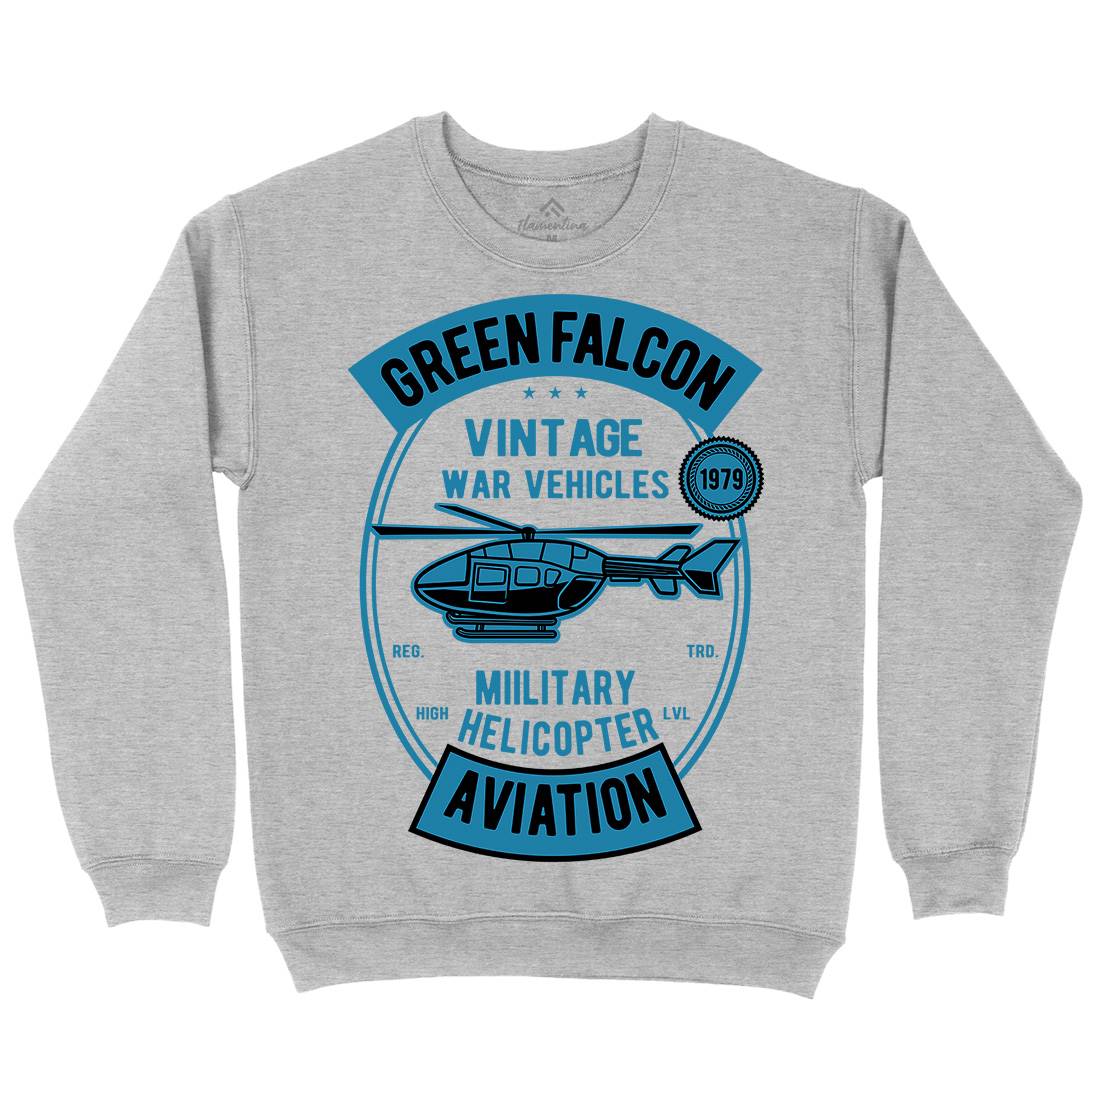 Green Falcon Kids Crew Neck Sweatshirt Vehicles D540